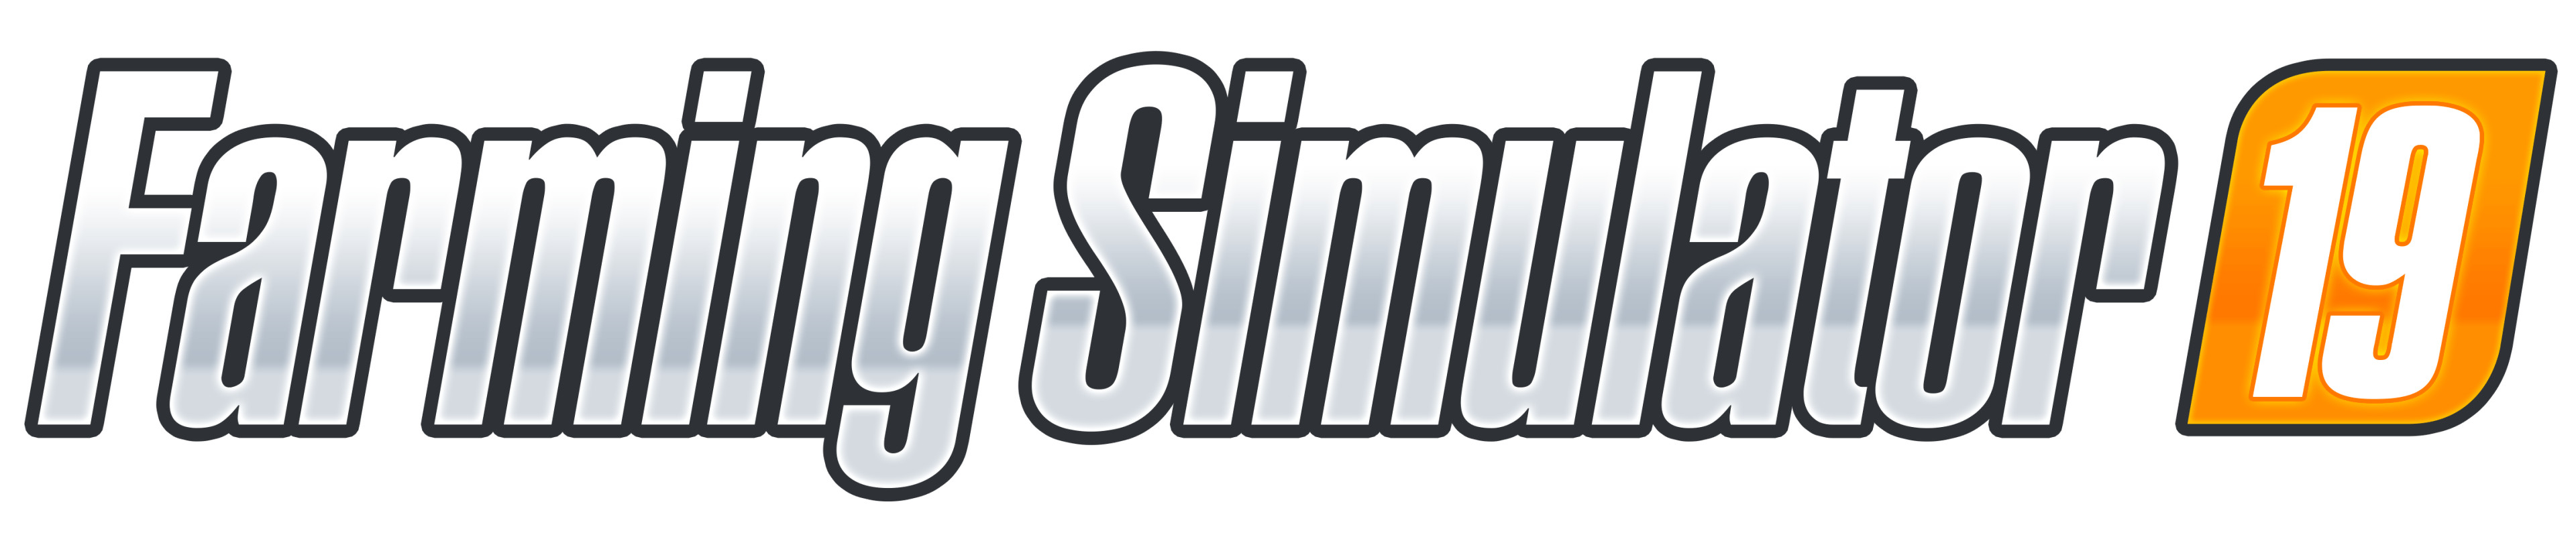 Farming simulator 19 logo - lomicloud